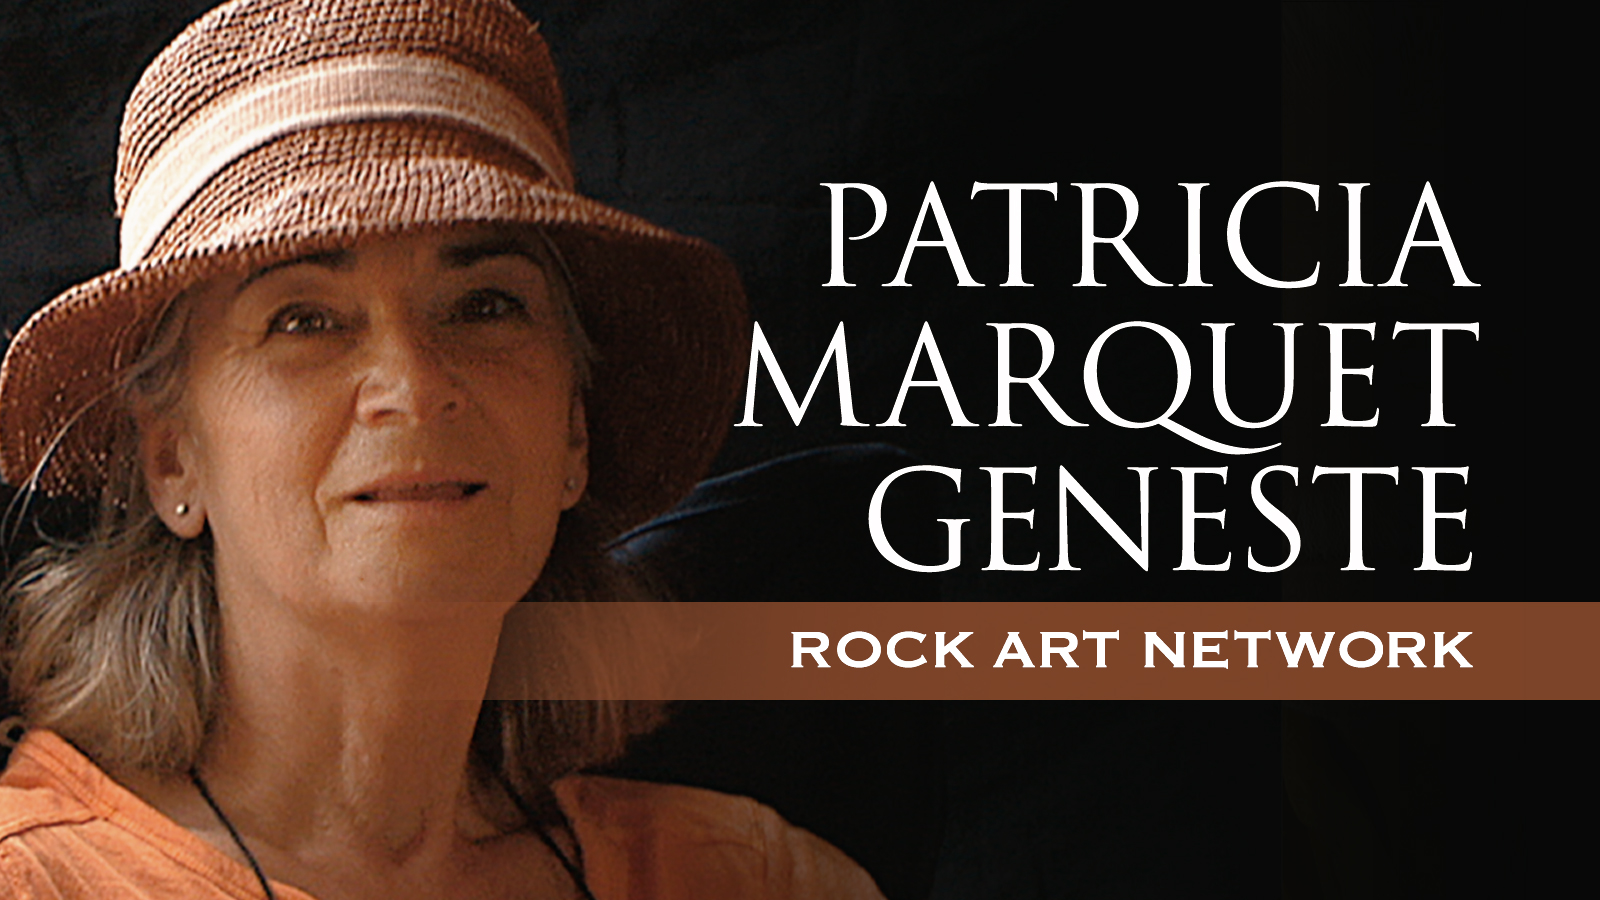 Rock Art Network Patricia Marquet Geneste